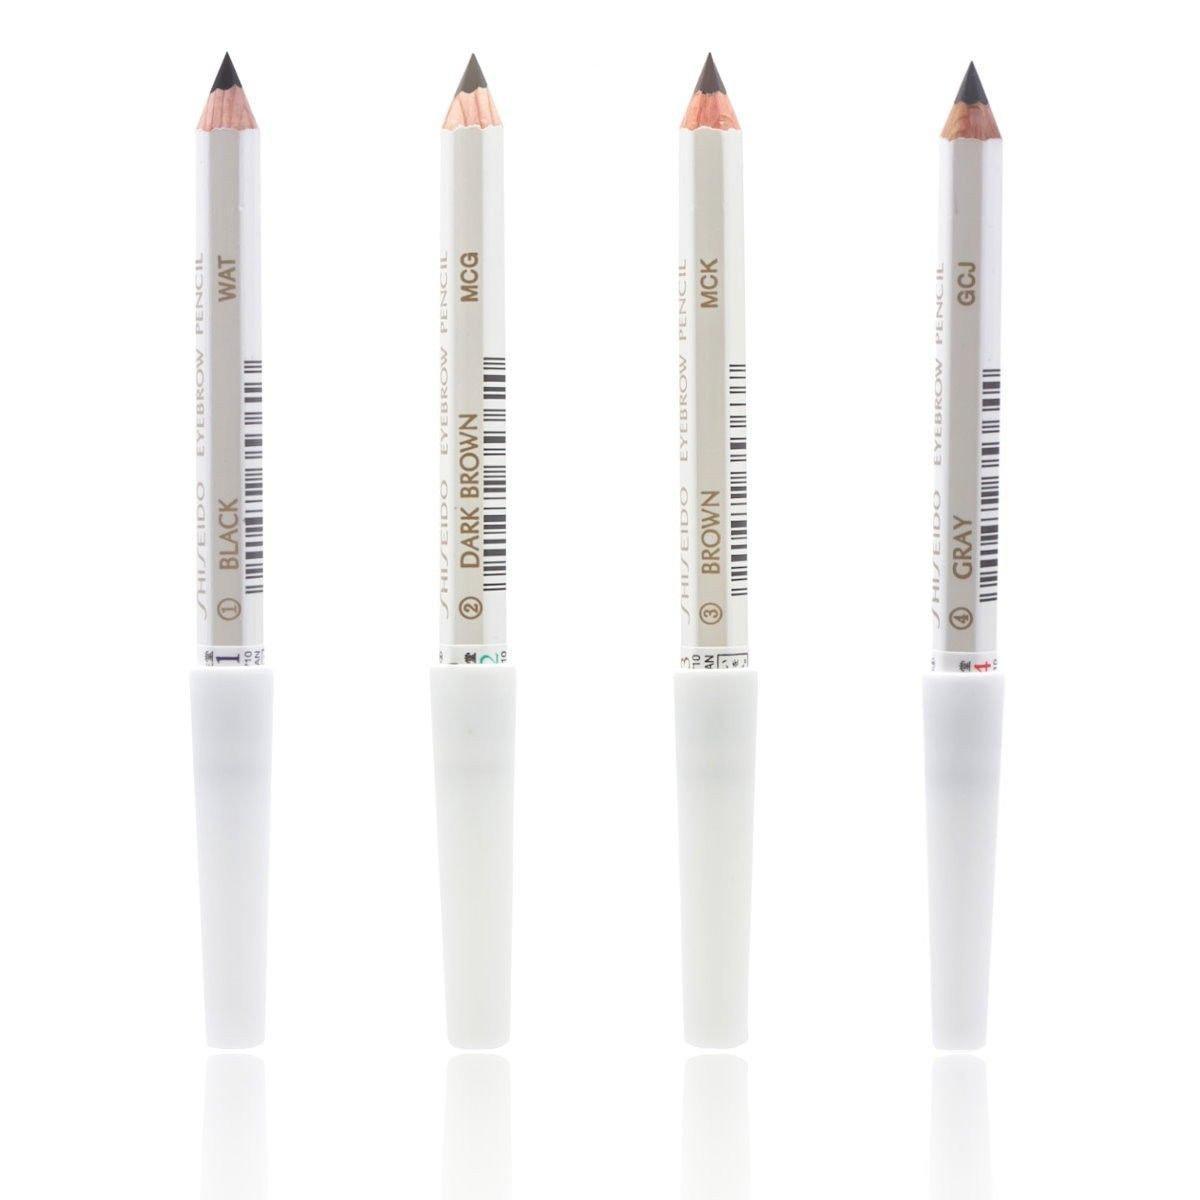 Shiseido Eyebrow Pencil – Black / Dark Brown / Brown / Gray